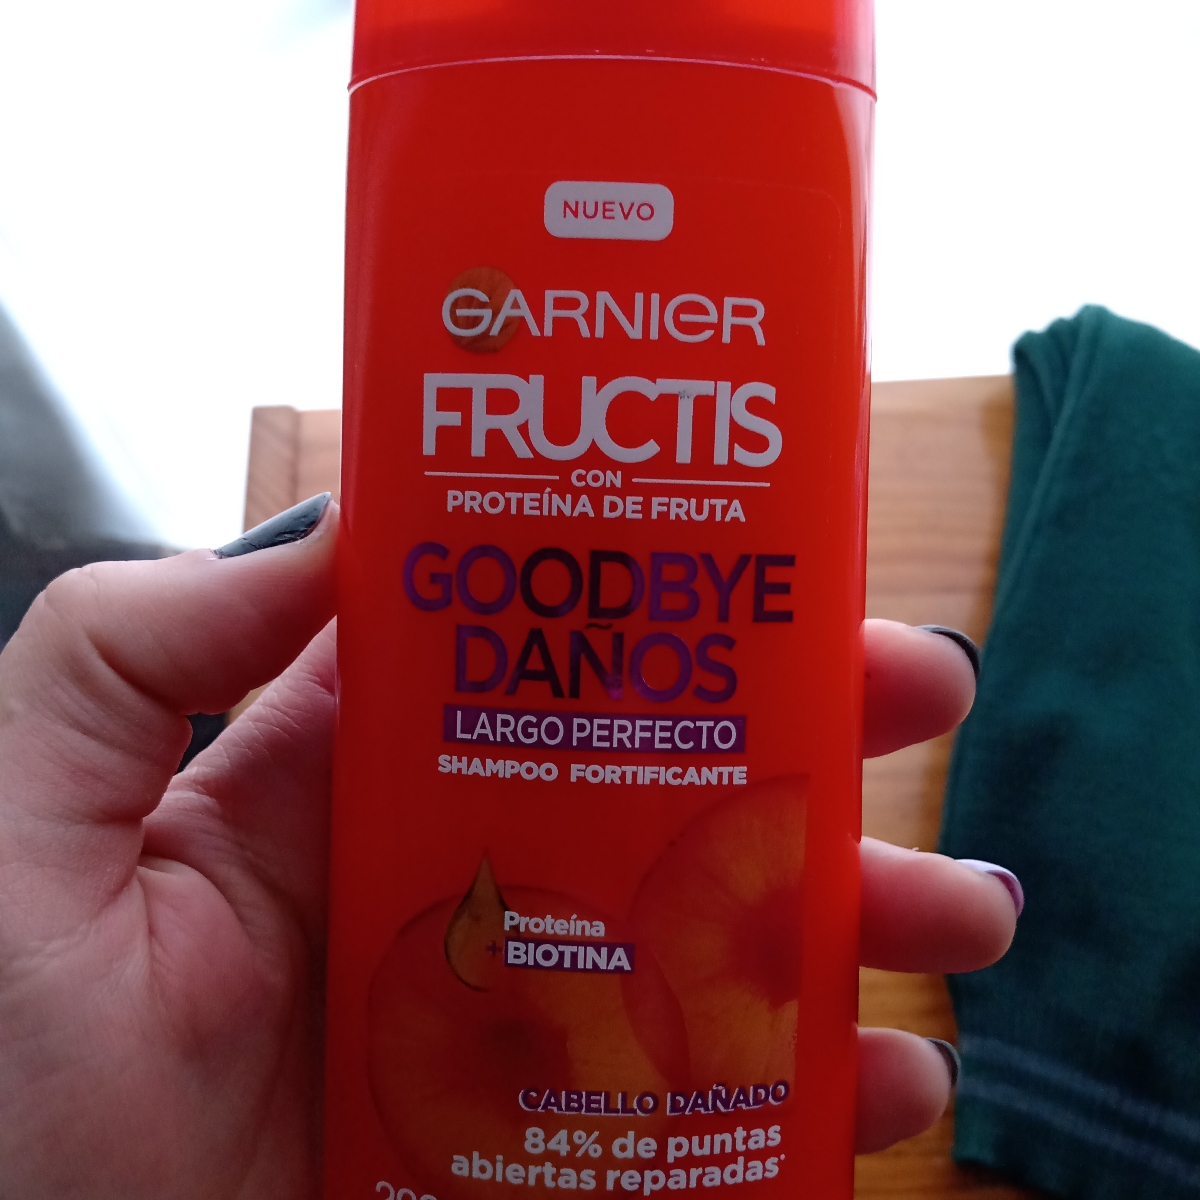 Garnier Fructis Shampoo Goodbye Daños Largo Perfecto Review | abillion